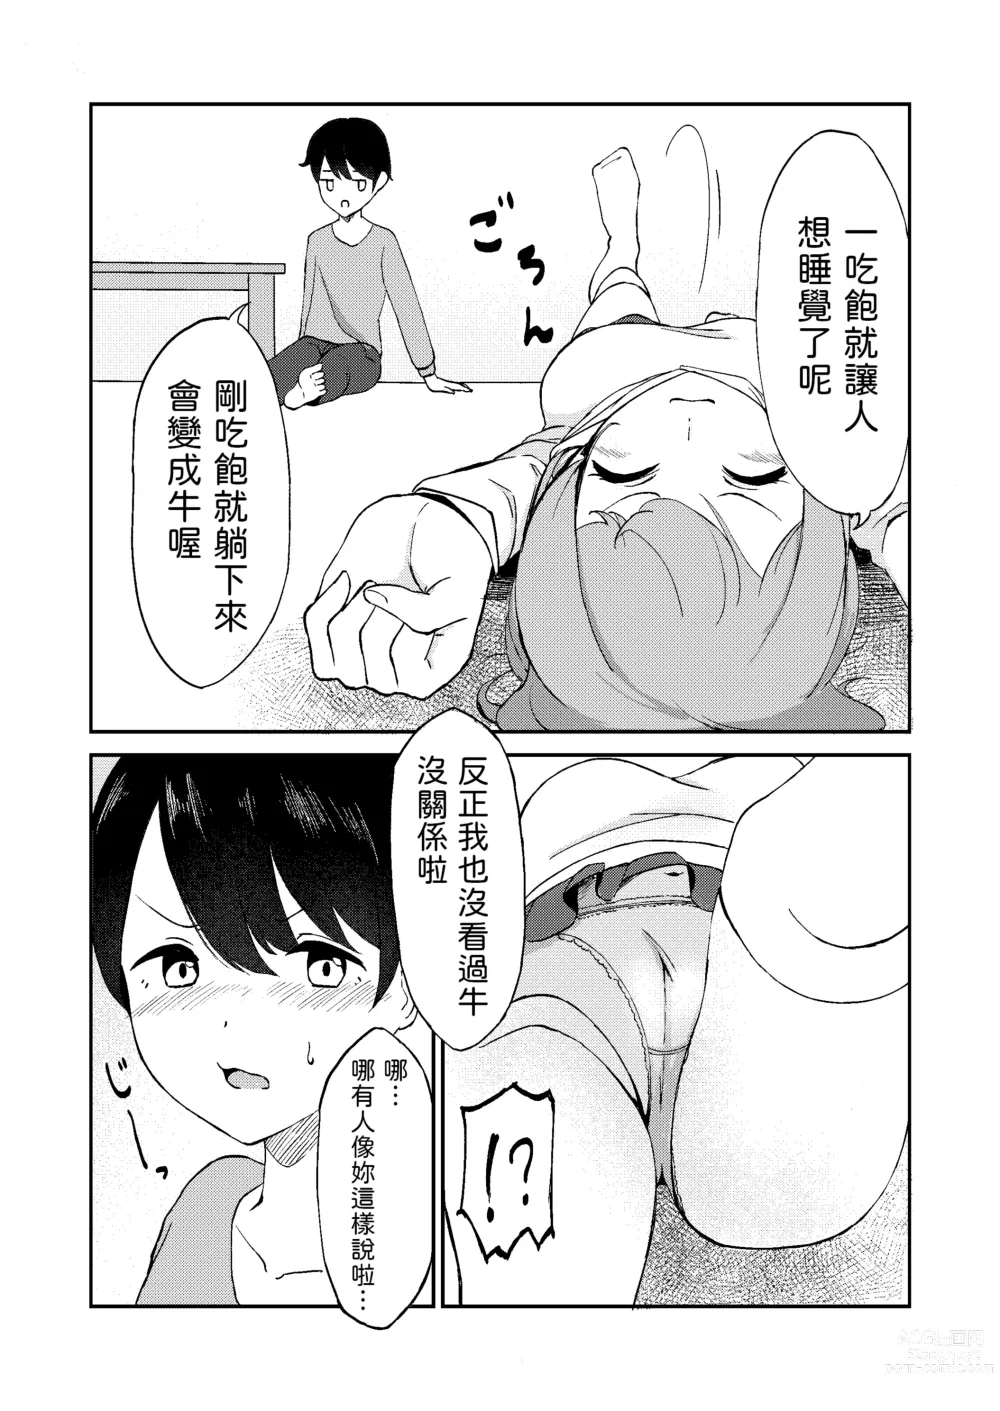 Page 6 of doujinshi Kimi ga Mienakutatte